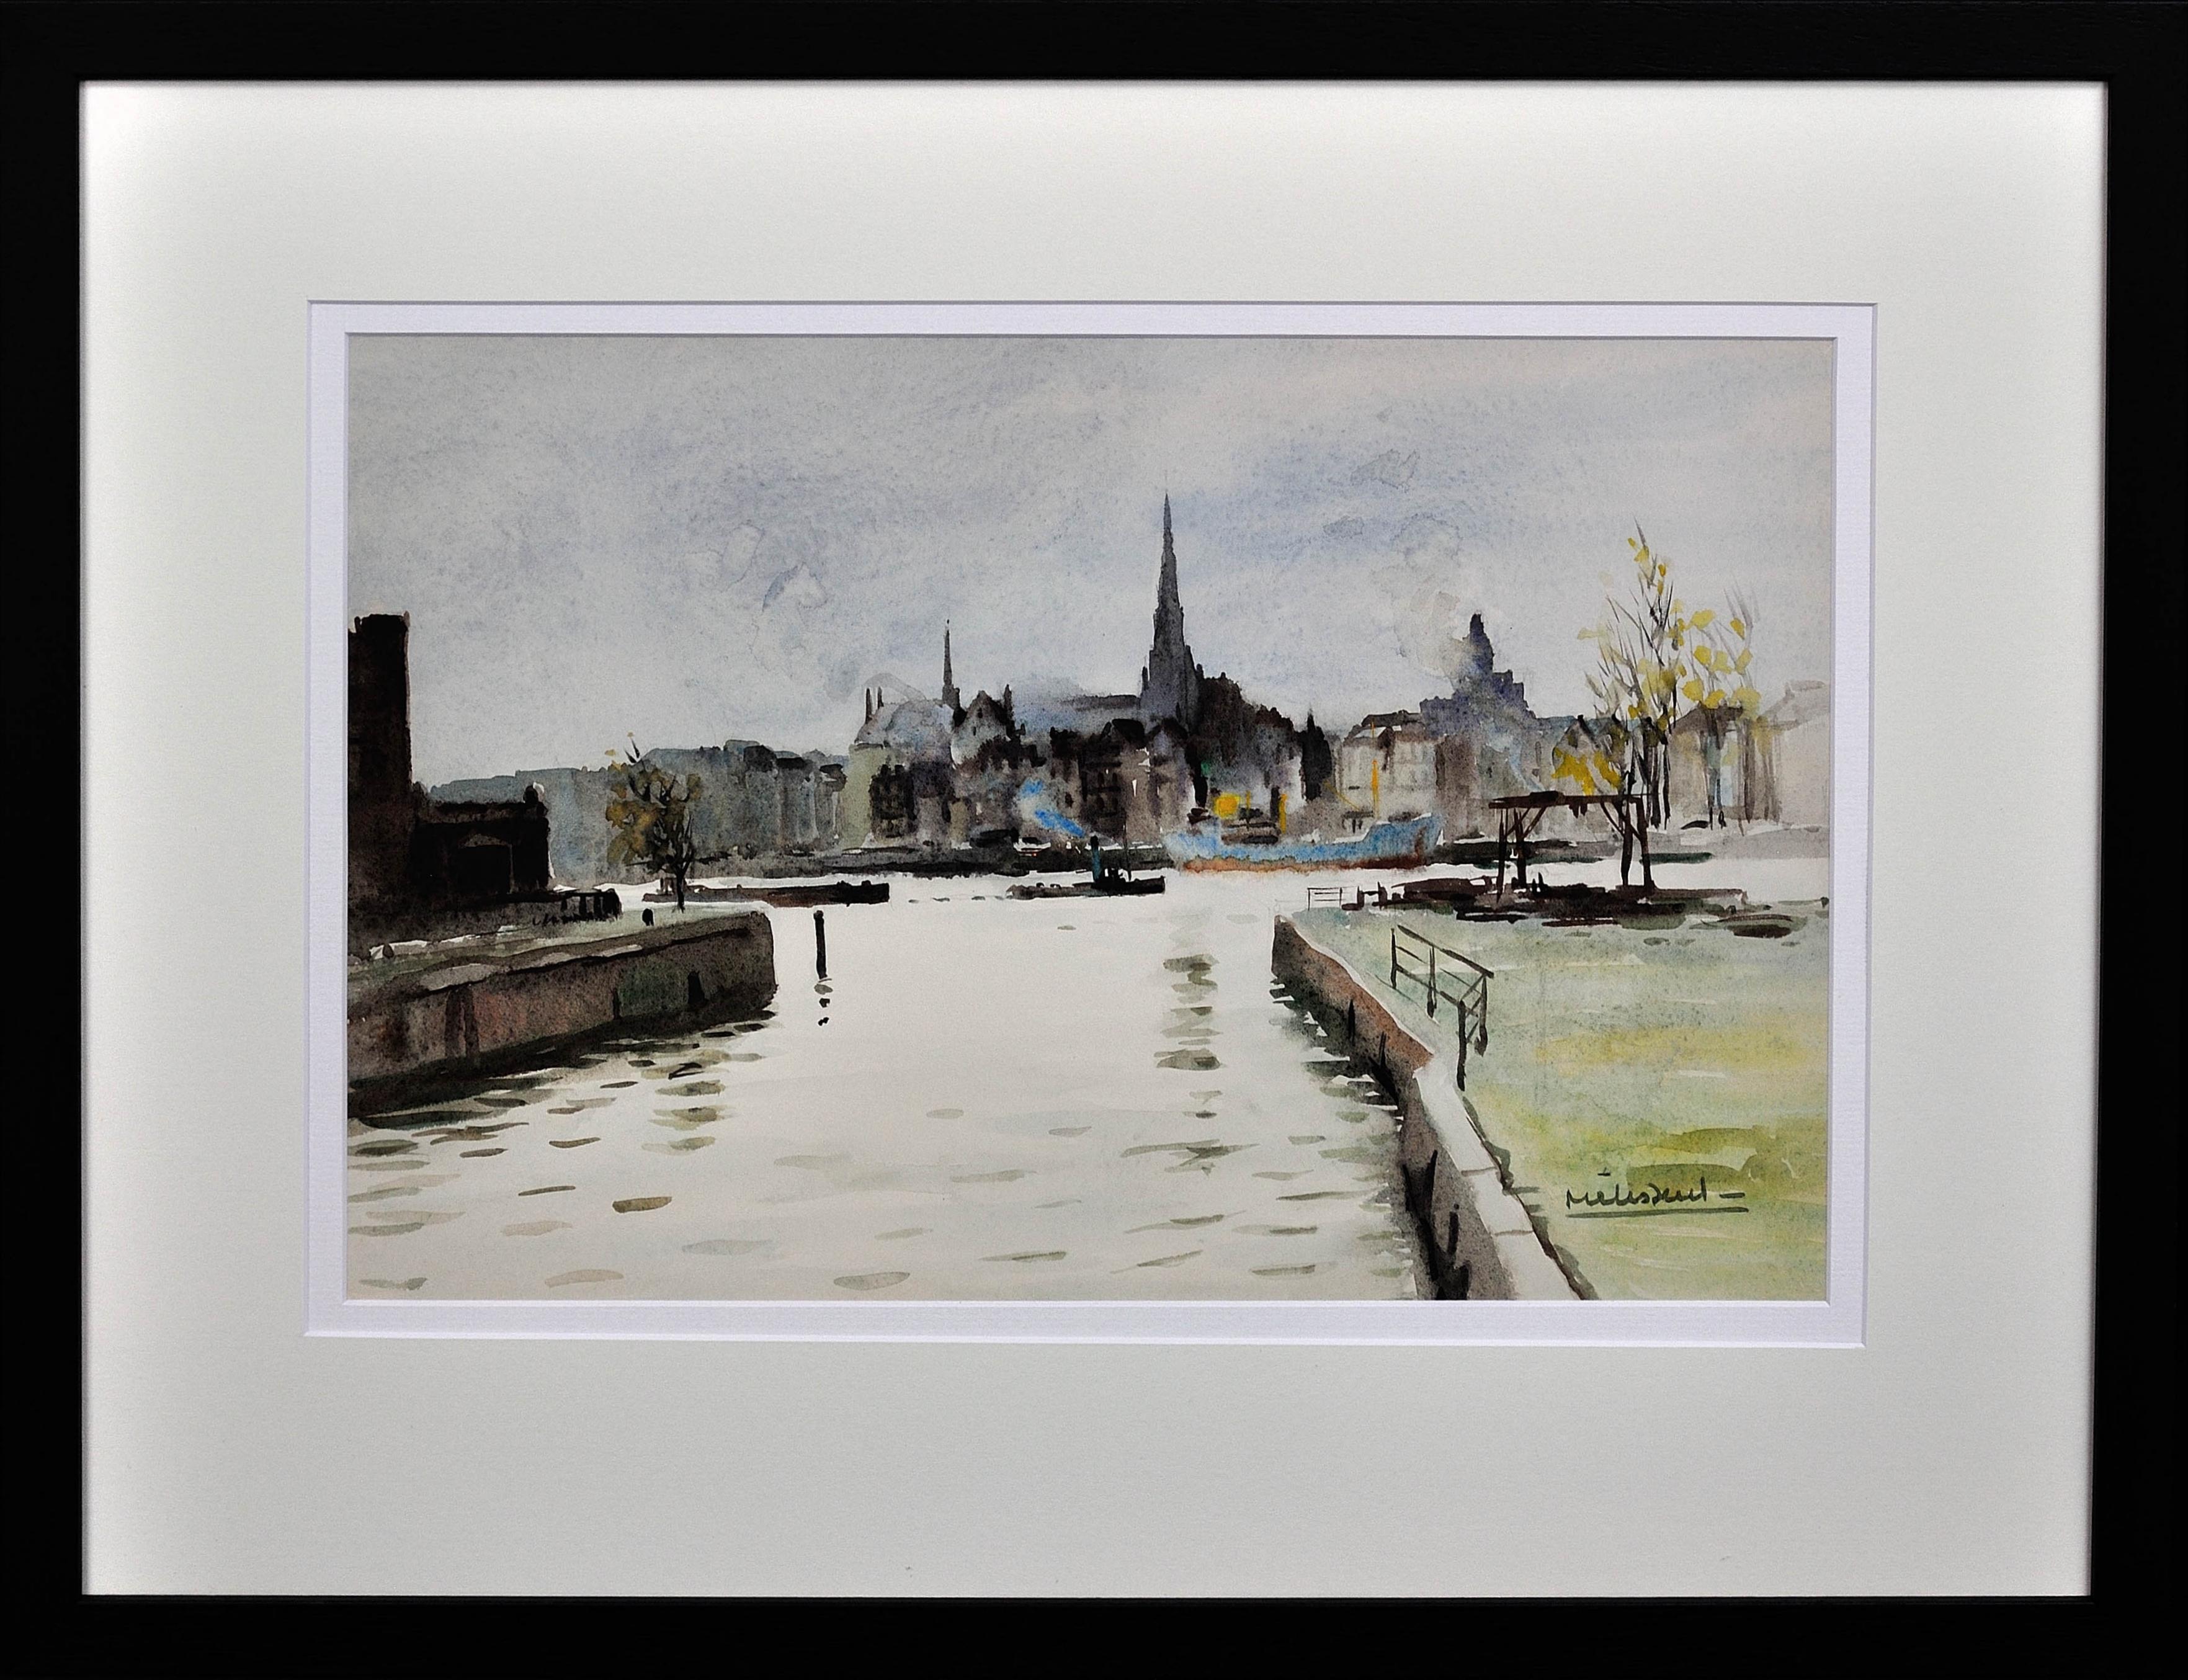 Landscape Art Maurice Raoul Melissent - The Maritime District, Rotterdam. 1950s. Docklands. Canaux. Church's. Aquarelle